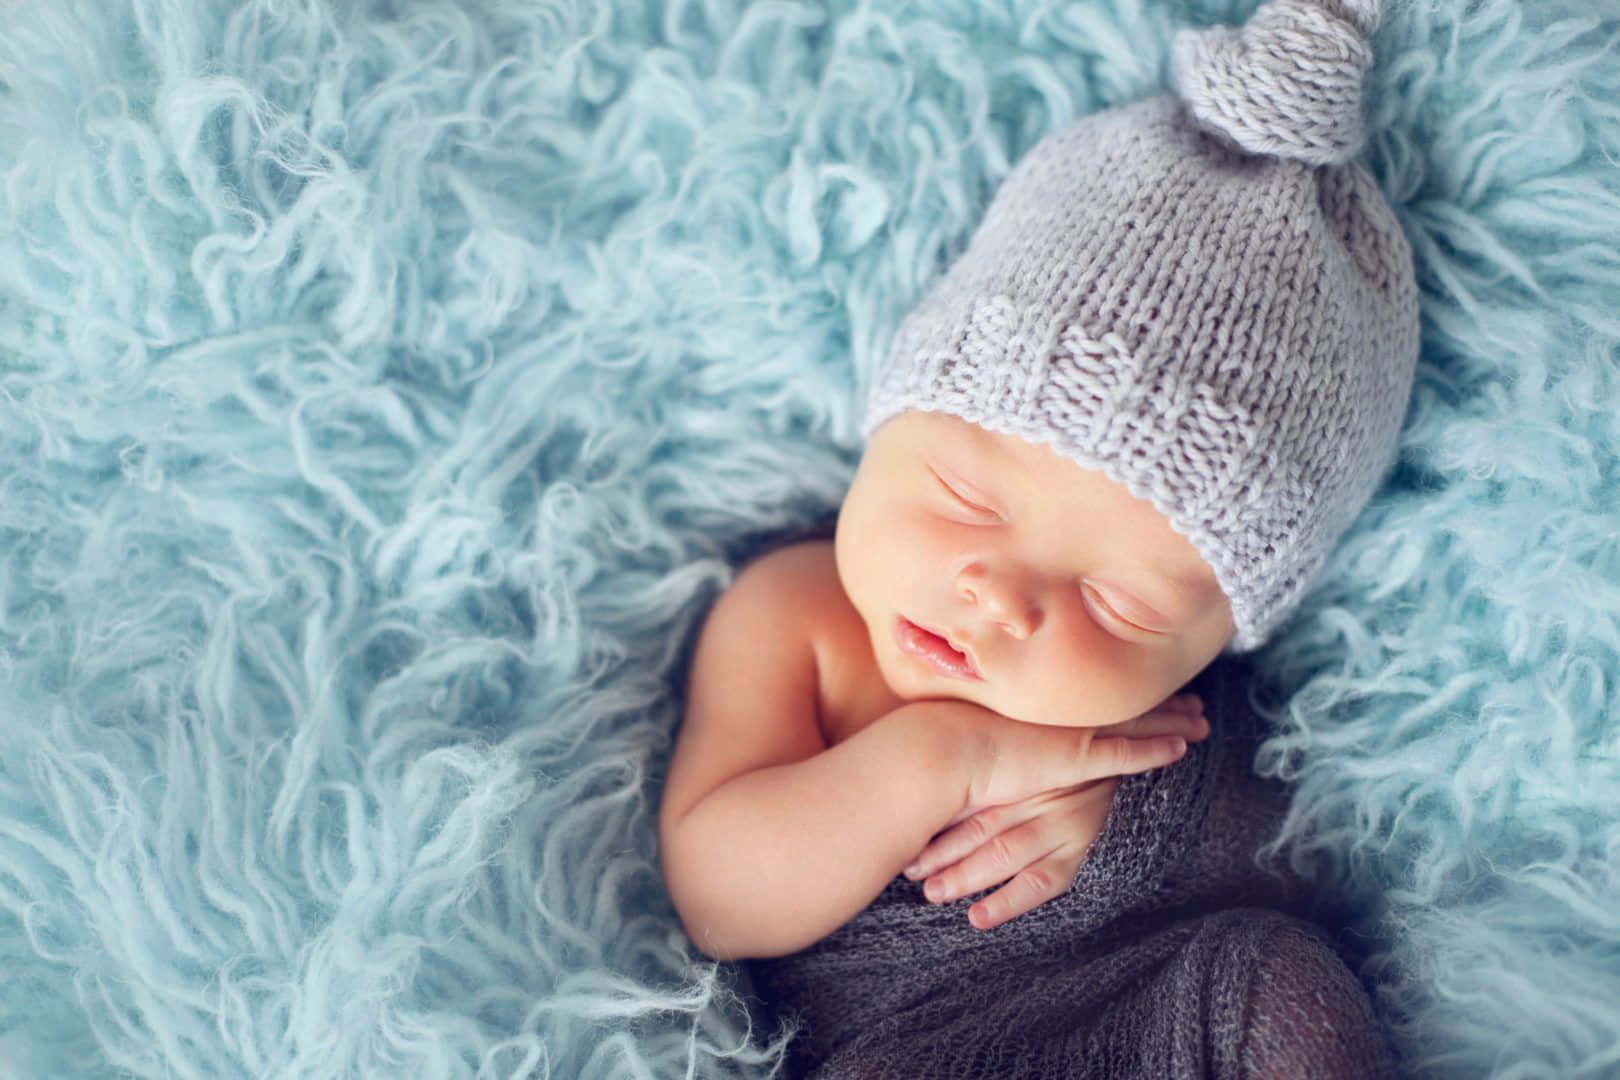 A precious newborn baby soundly sleeping